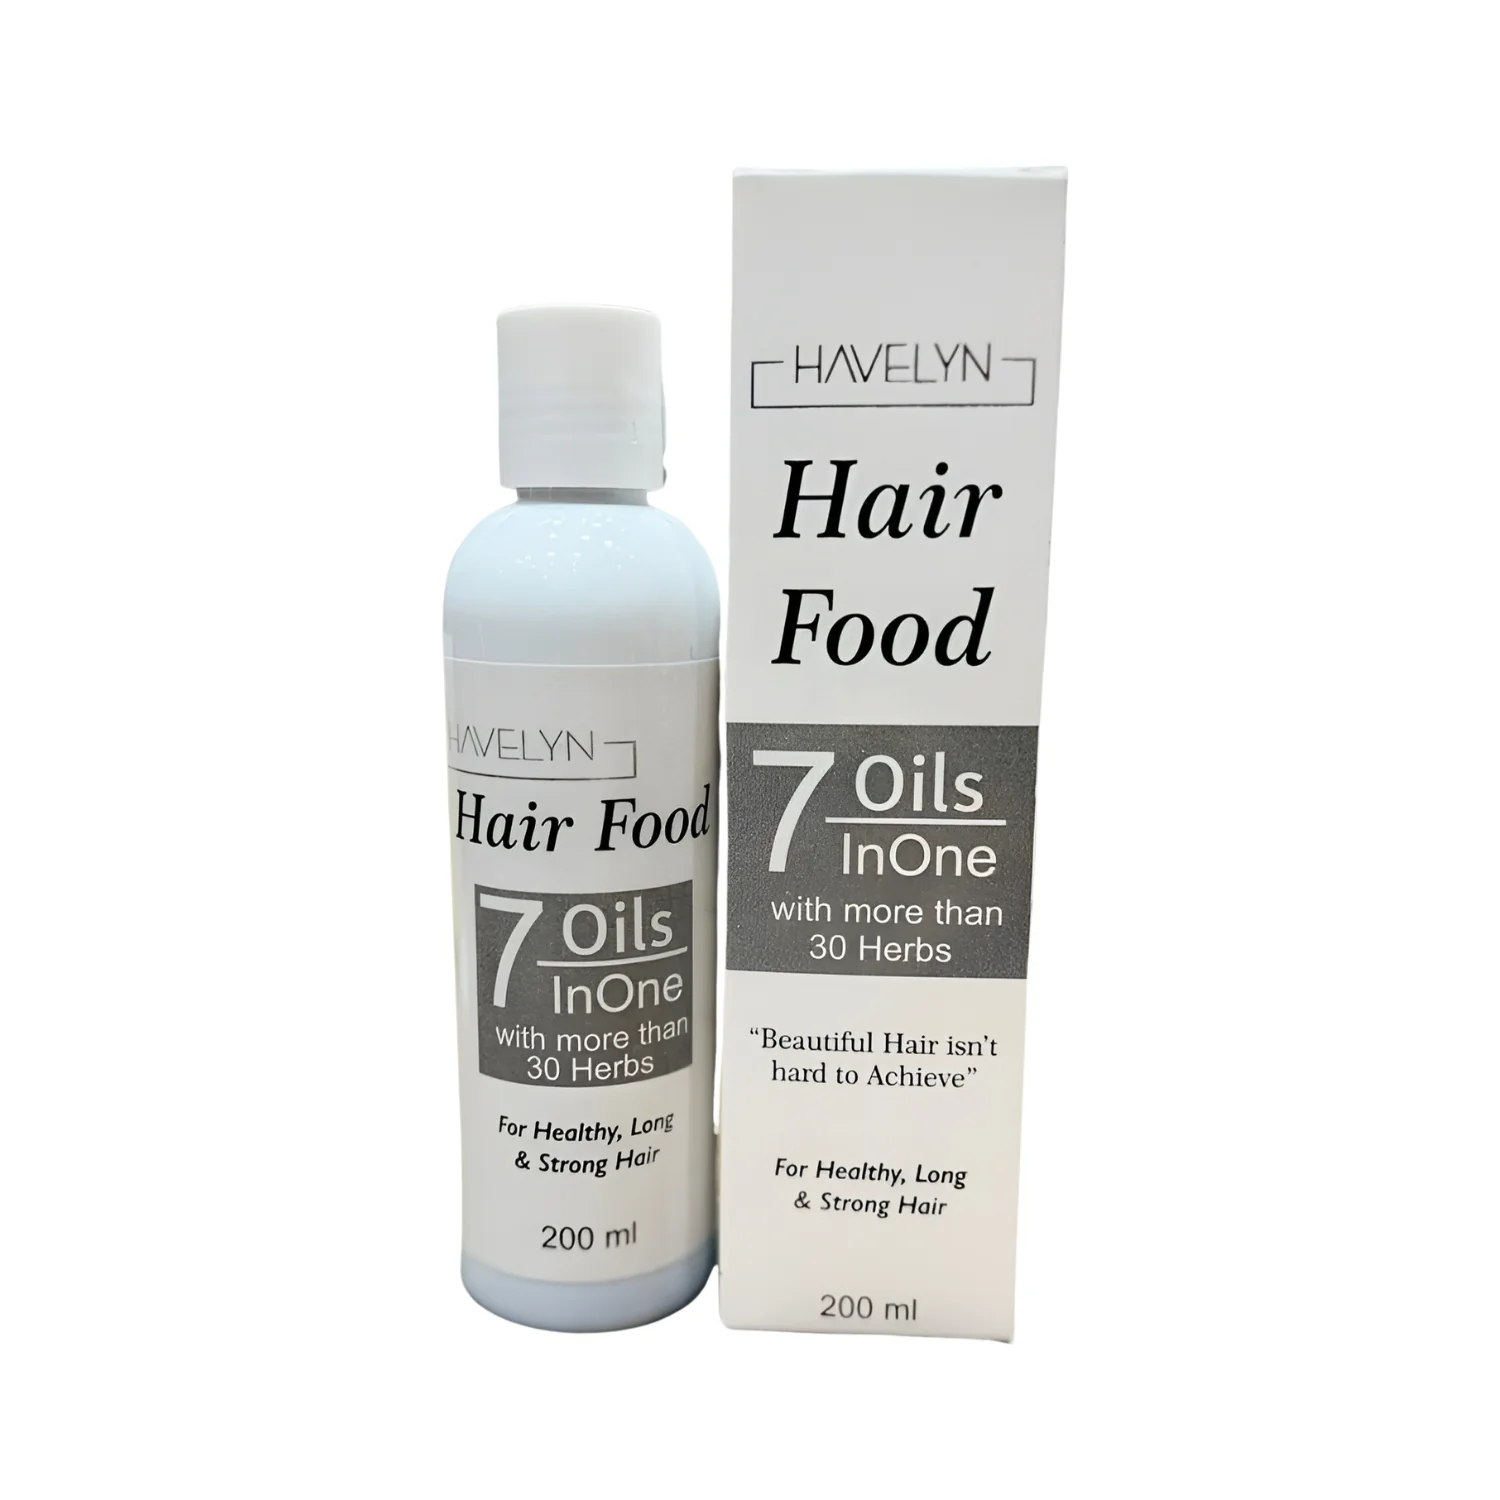 Havelyn Hair Food Oil For Healthy Long & Strong Hair 200ml